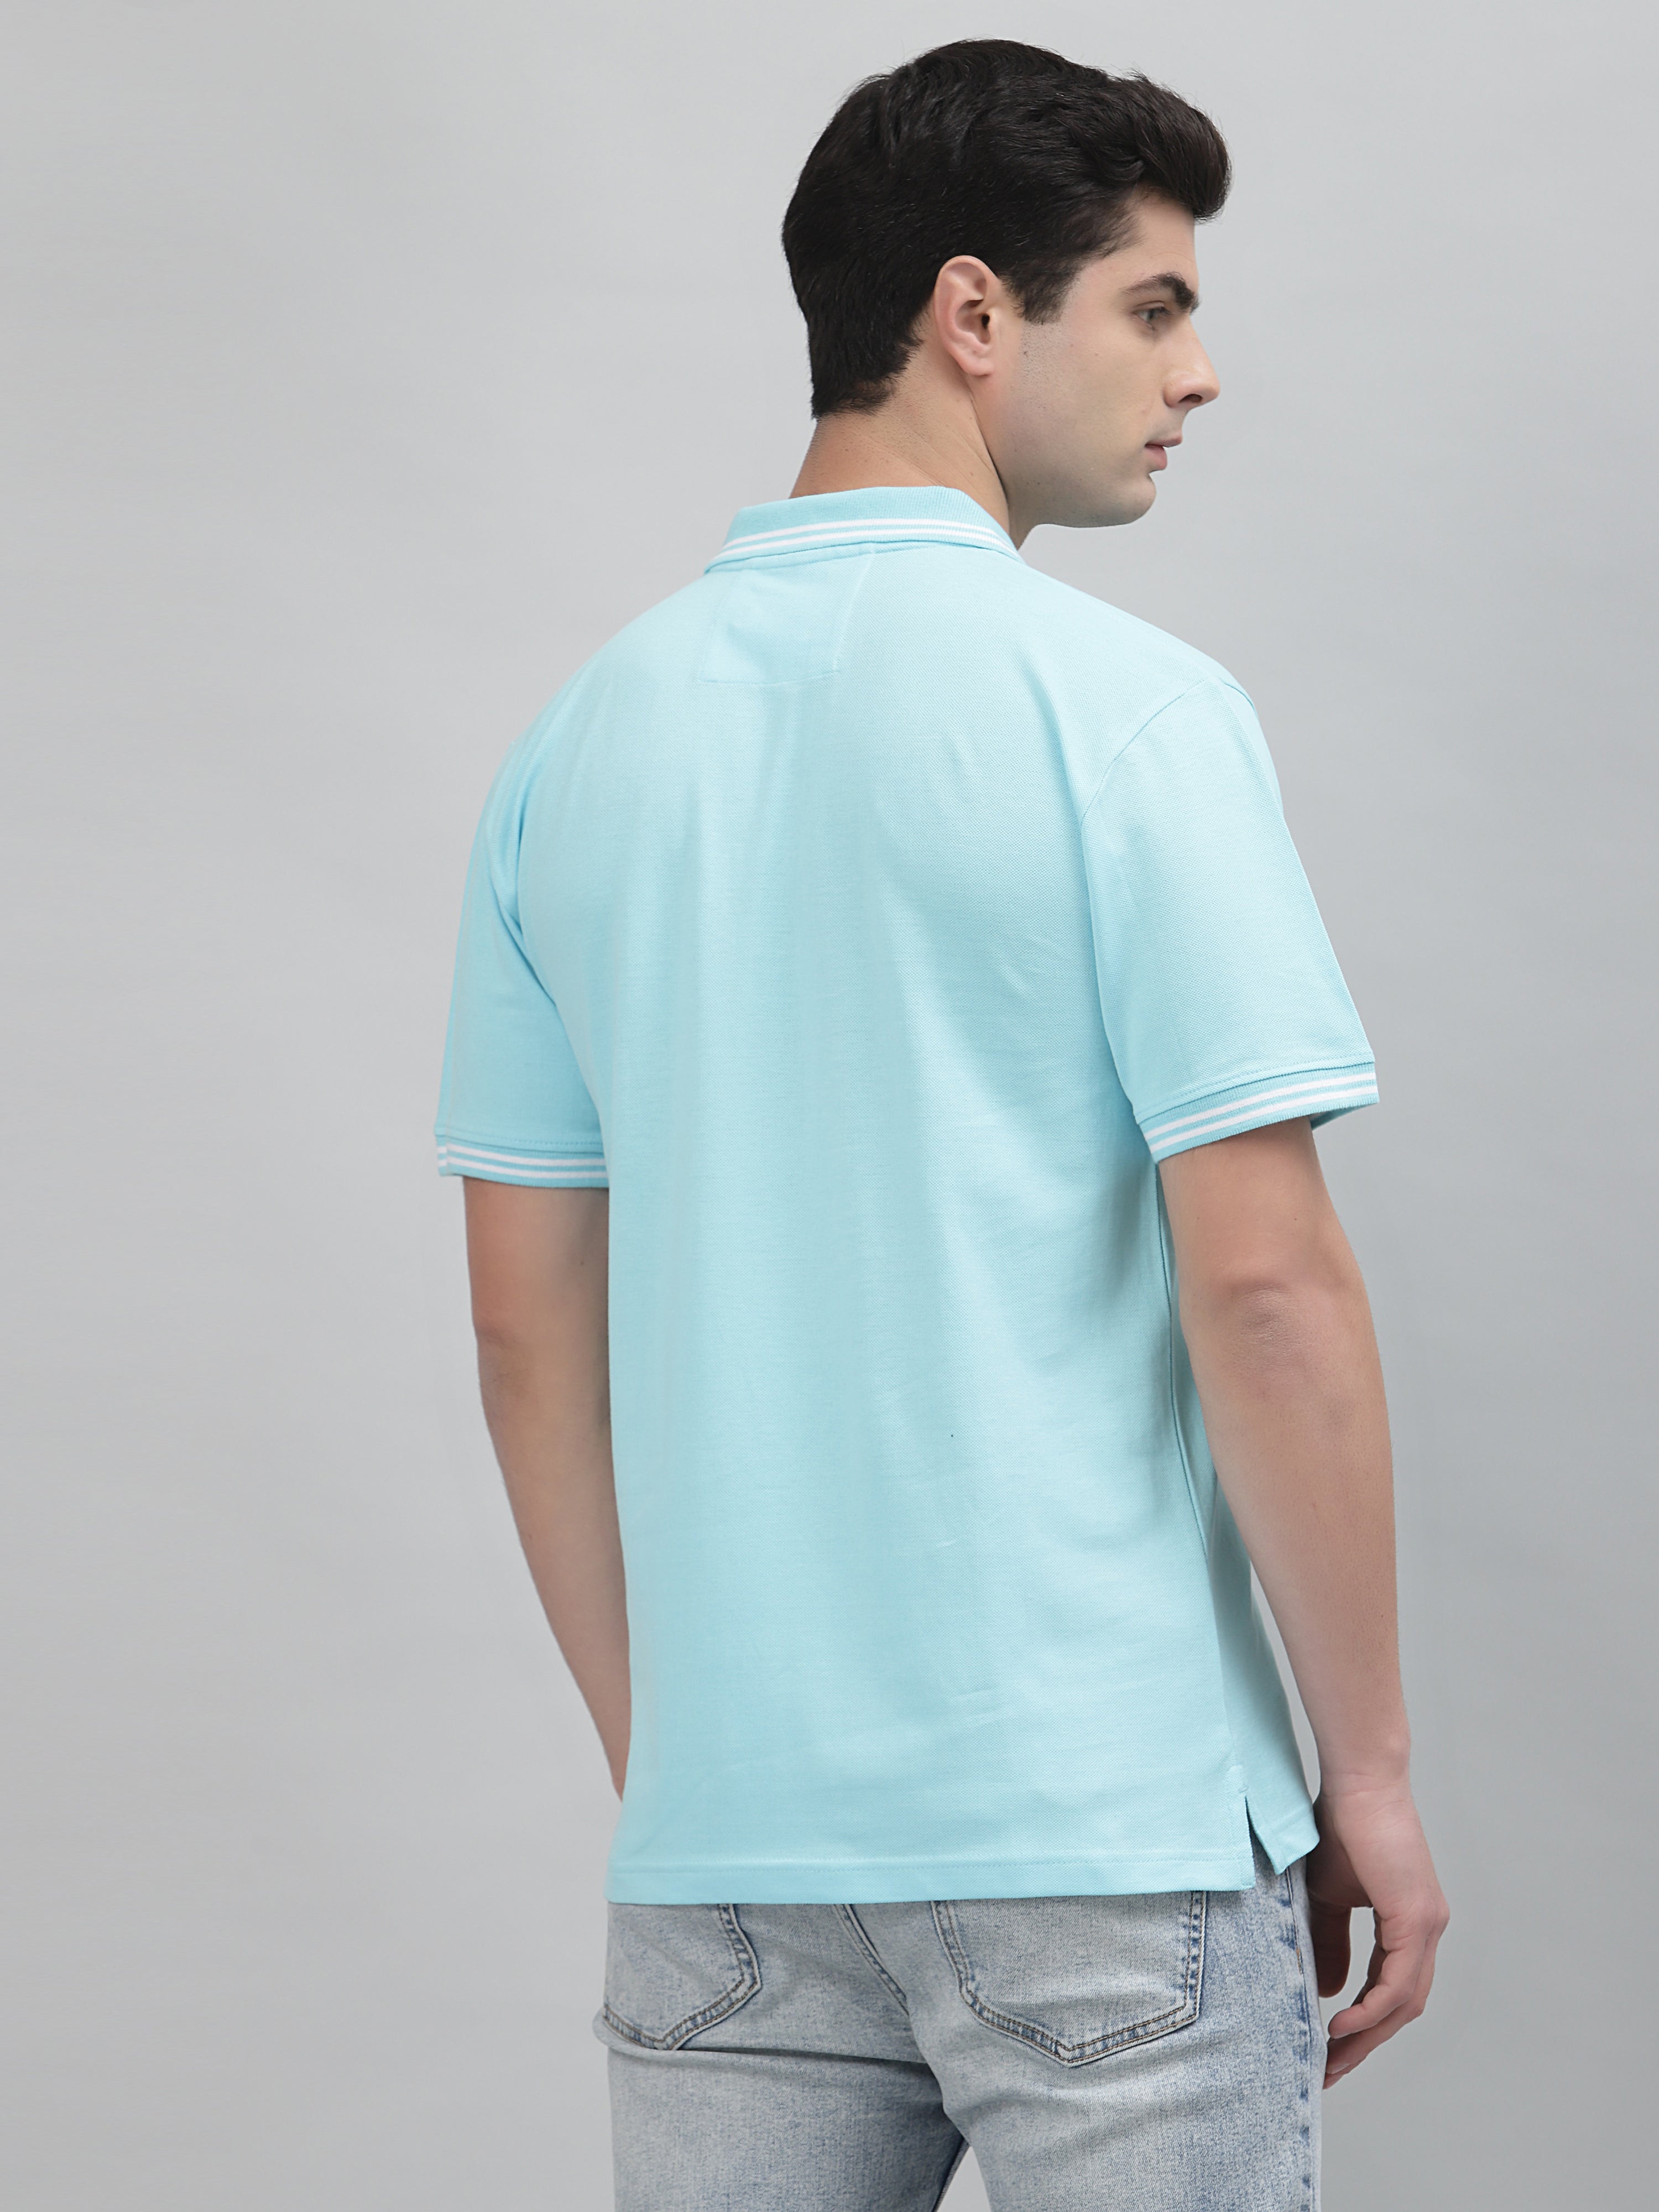 Brand Embroidered Sky Blue Pique Polo Shirt by Gavin Paris